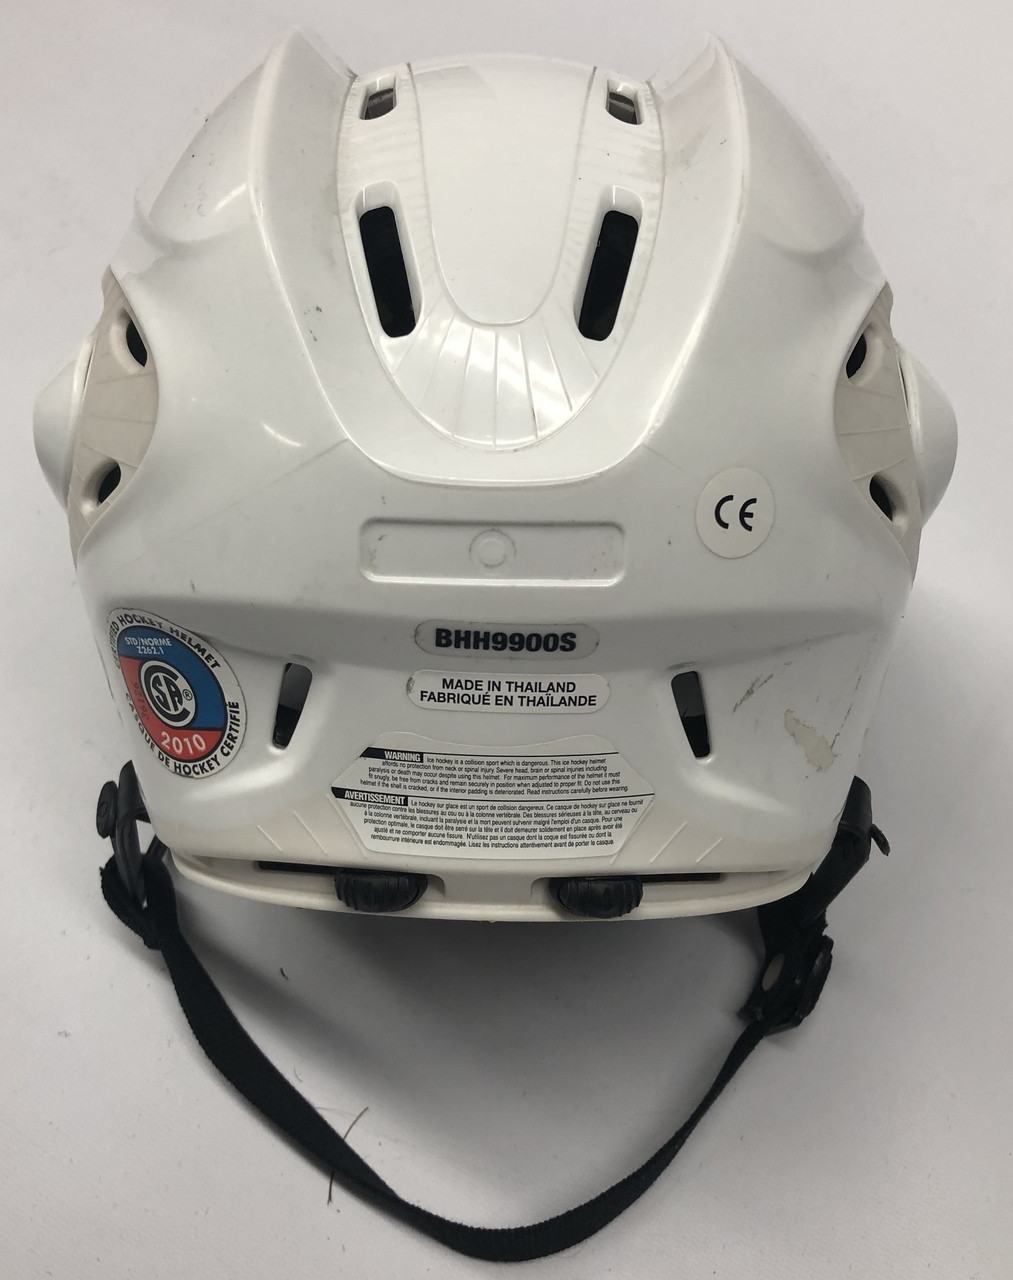 New St. Louis Blues Pro Stock Bauer 5100 Hockey Helmet-Small